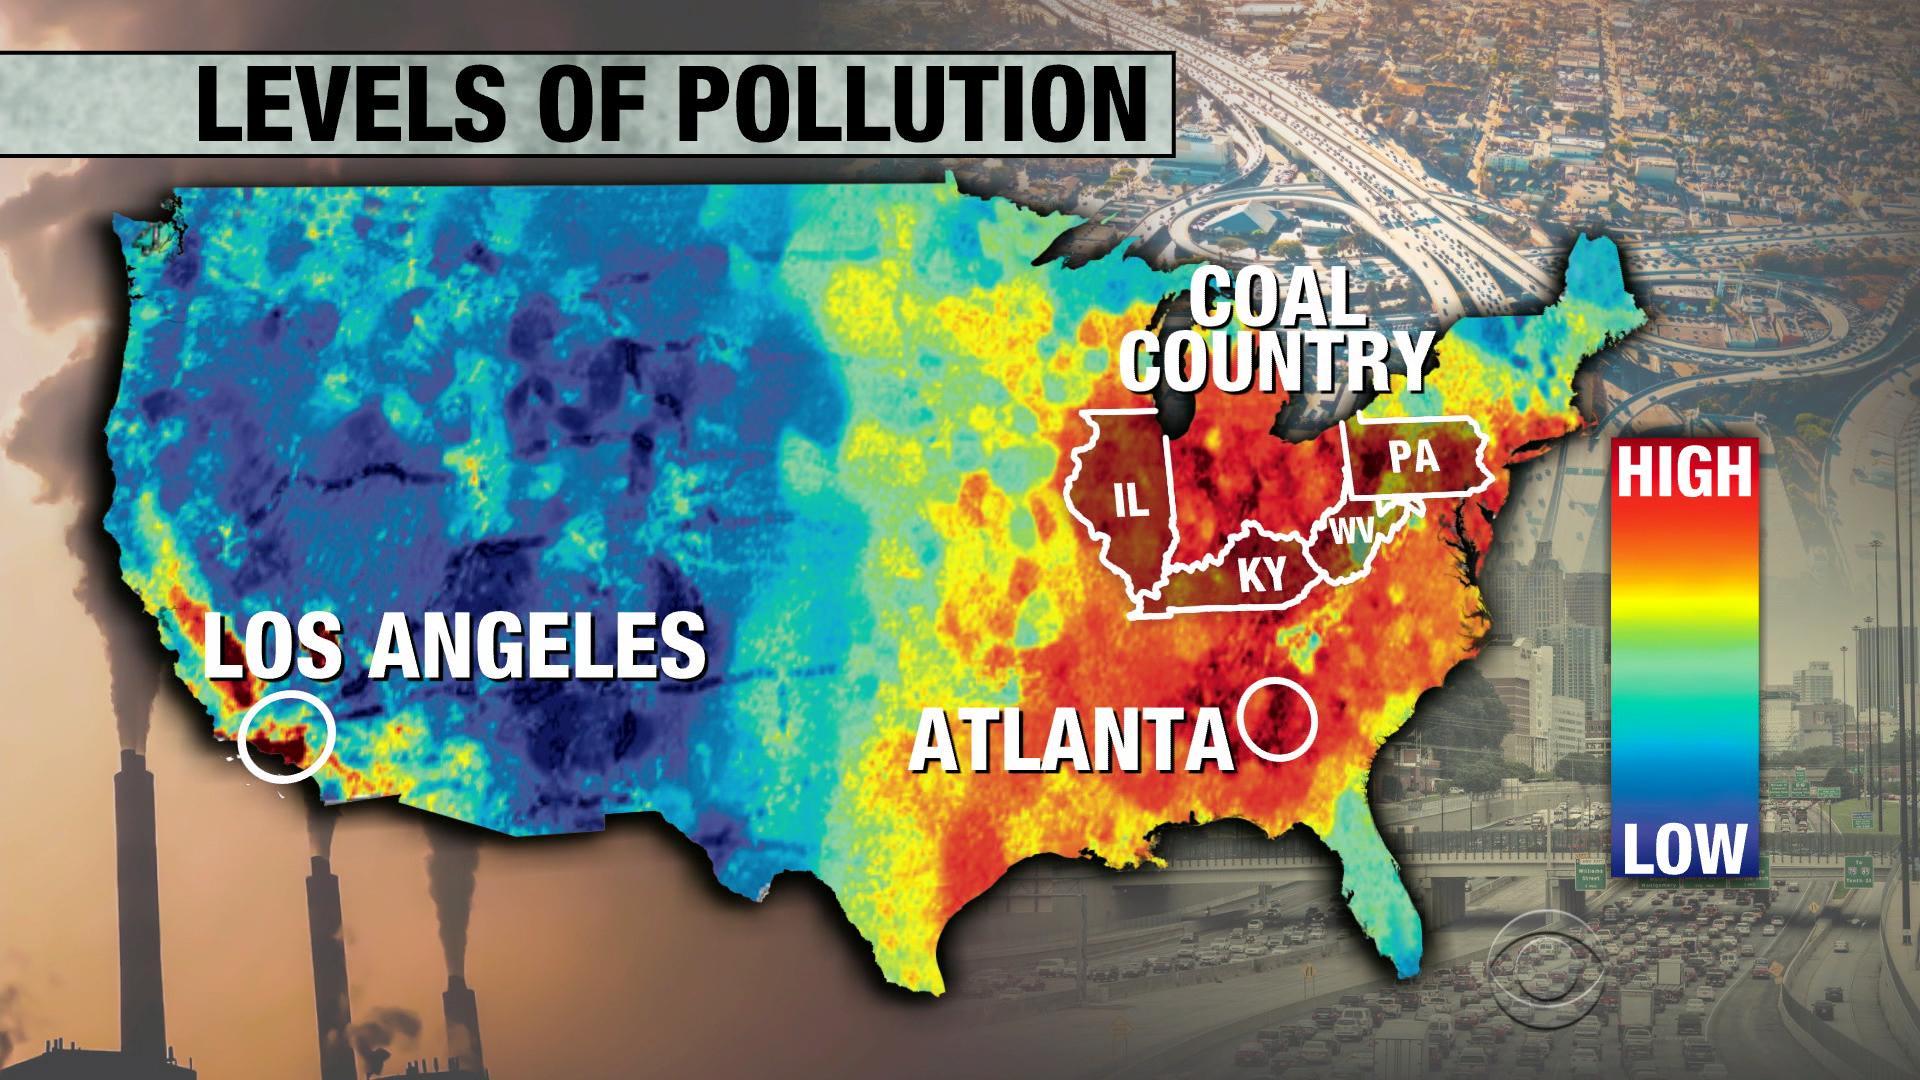 Air pollution levels considered safe can still shorten lifespans, study